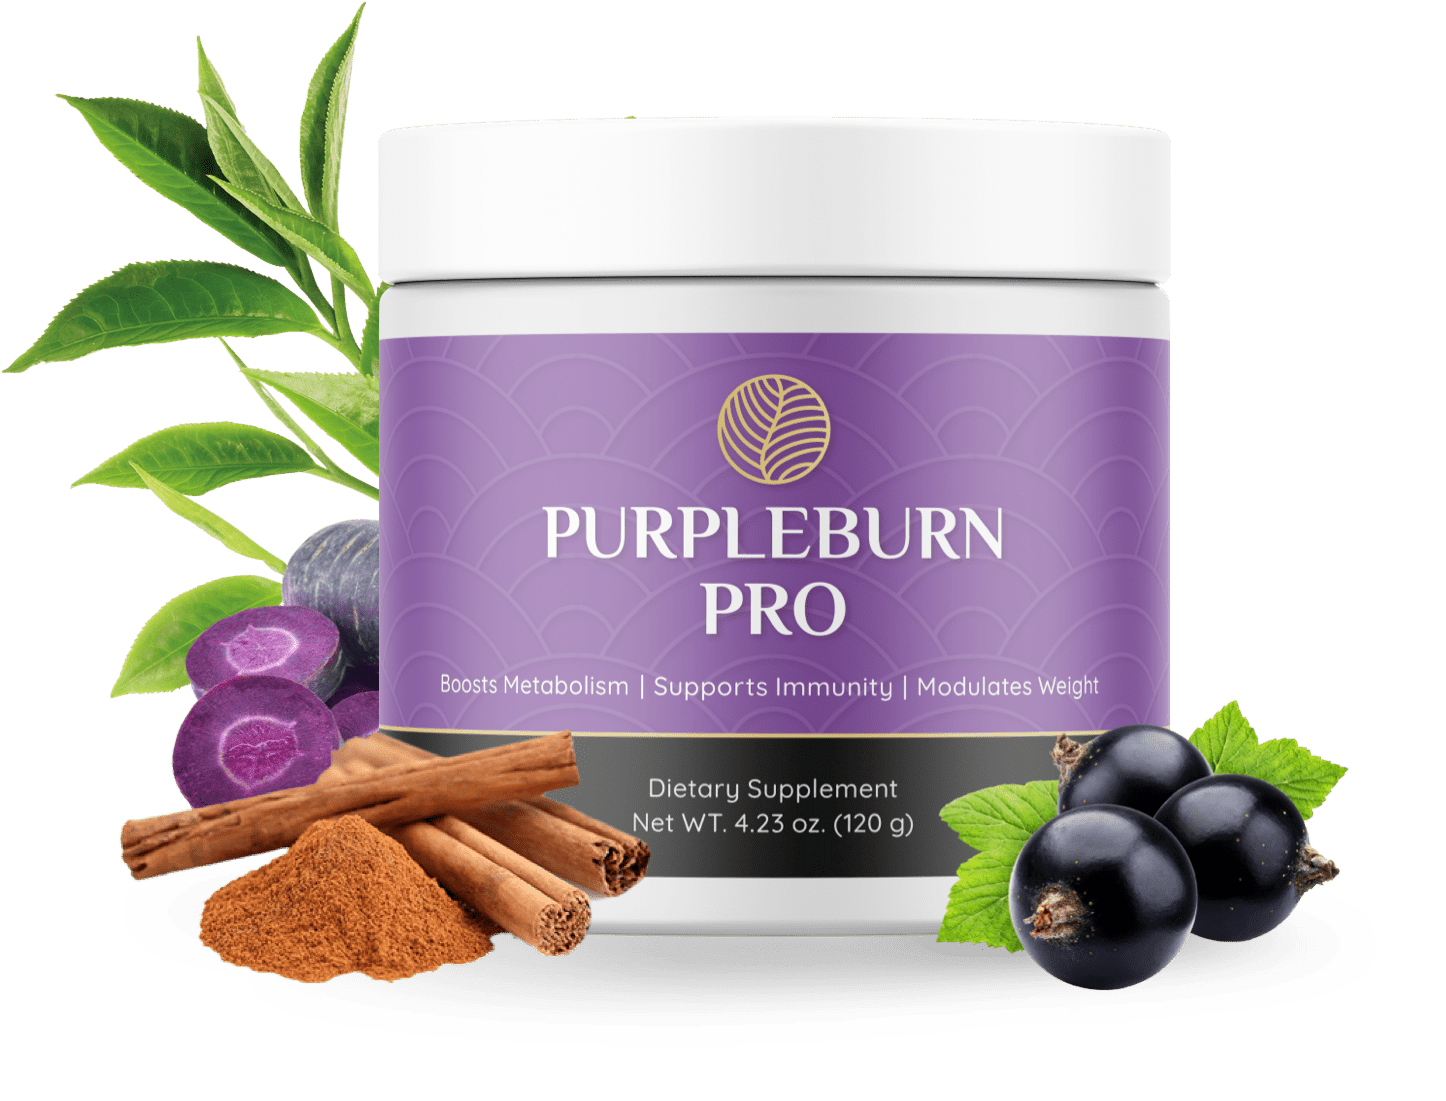 Purpleburn Pro bottles 1